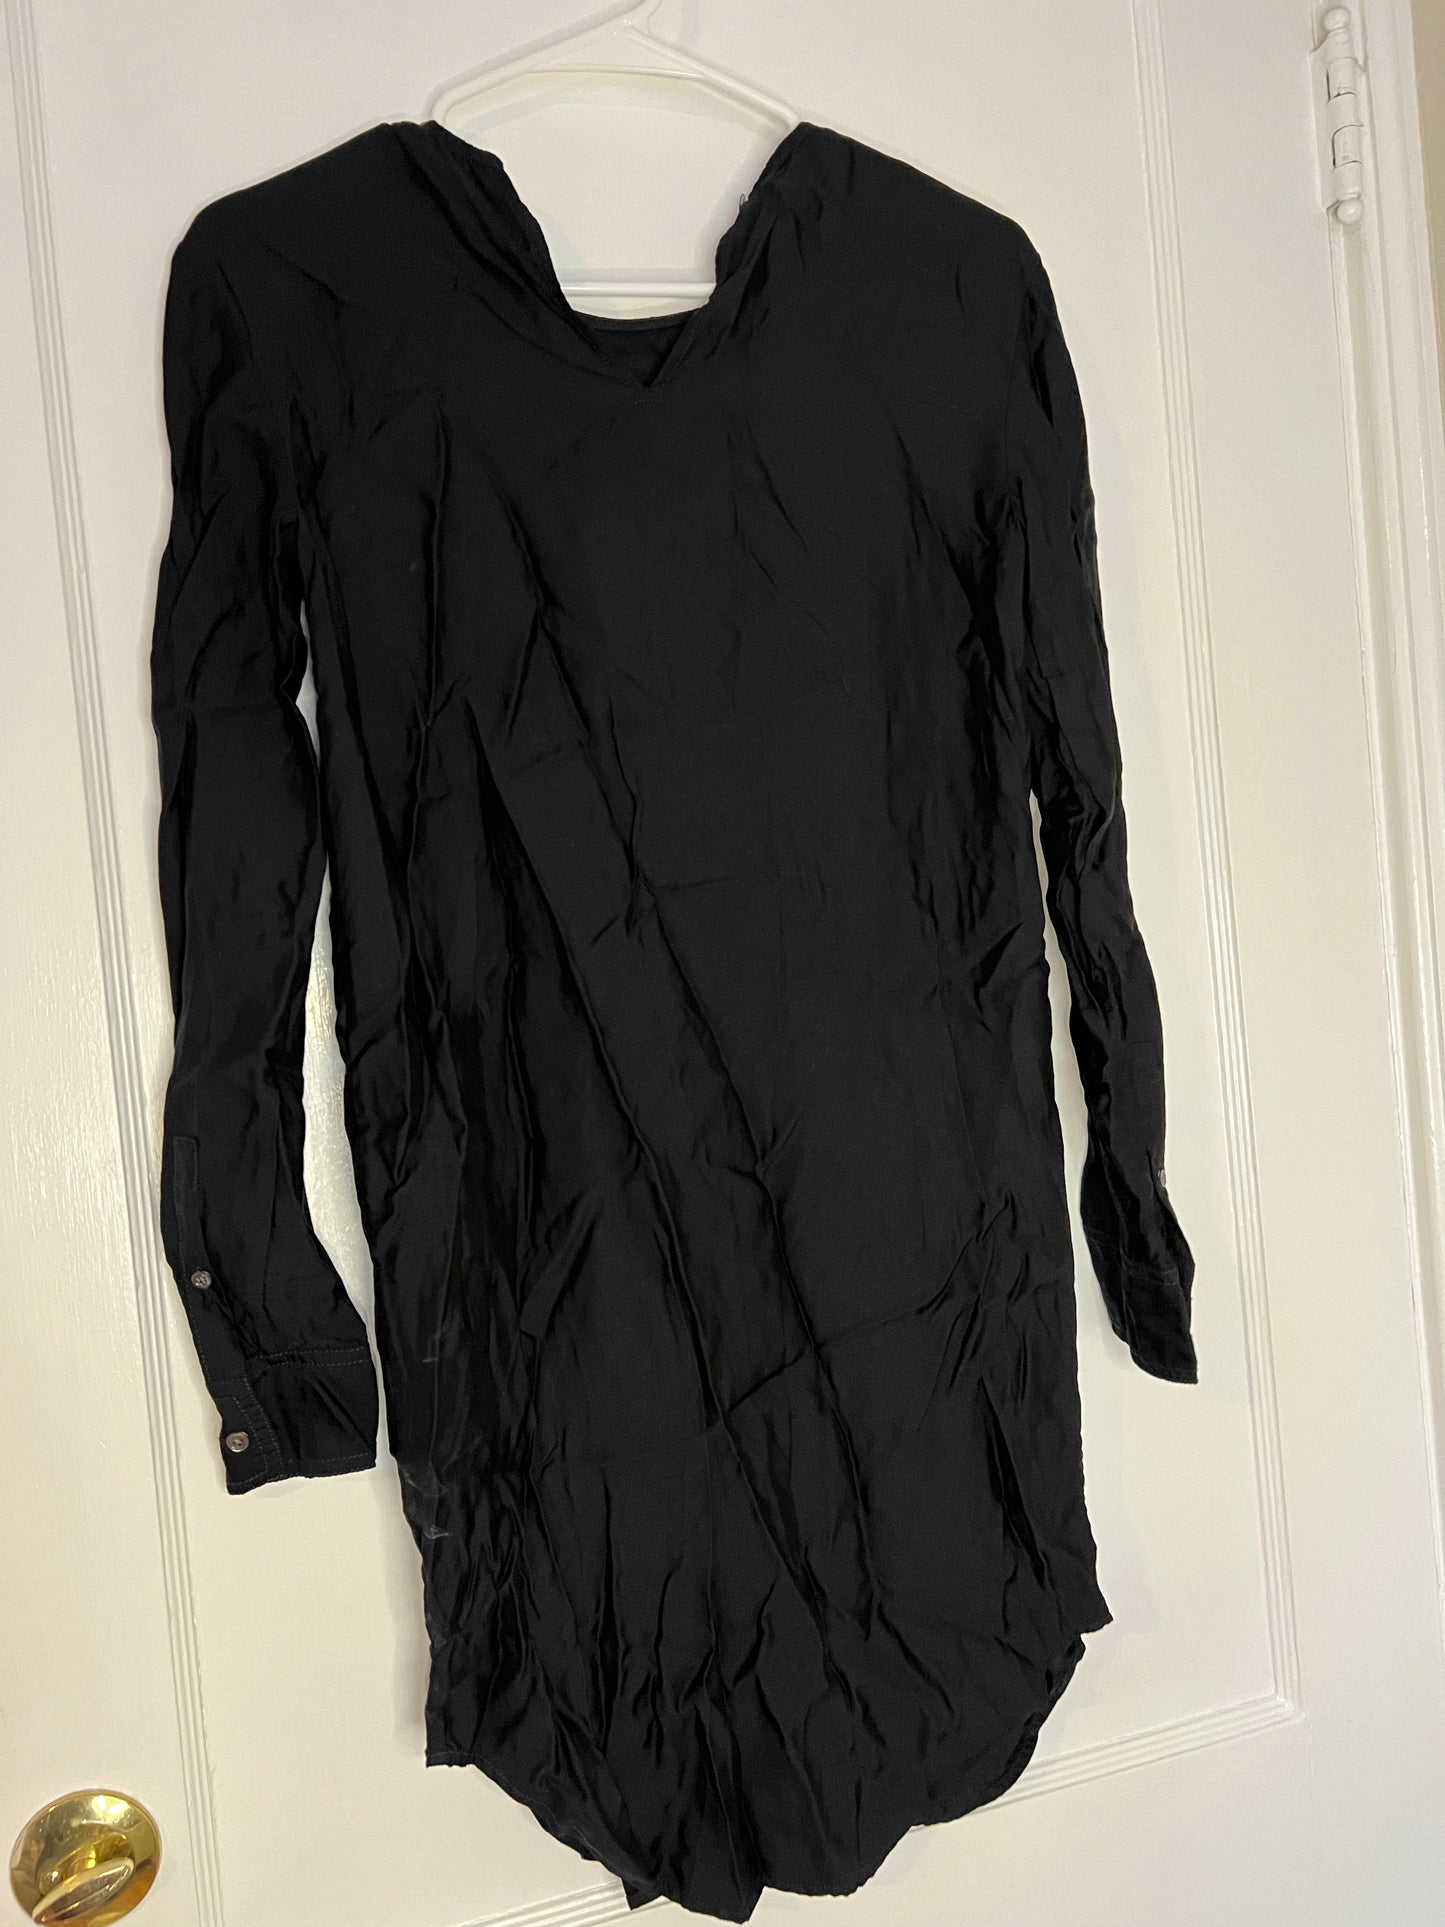 Standard James Perse Long Sleeve Black Pocket Dress Size 0 EUC PPU 45208 or Spring Sale